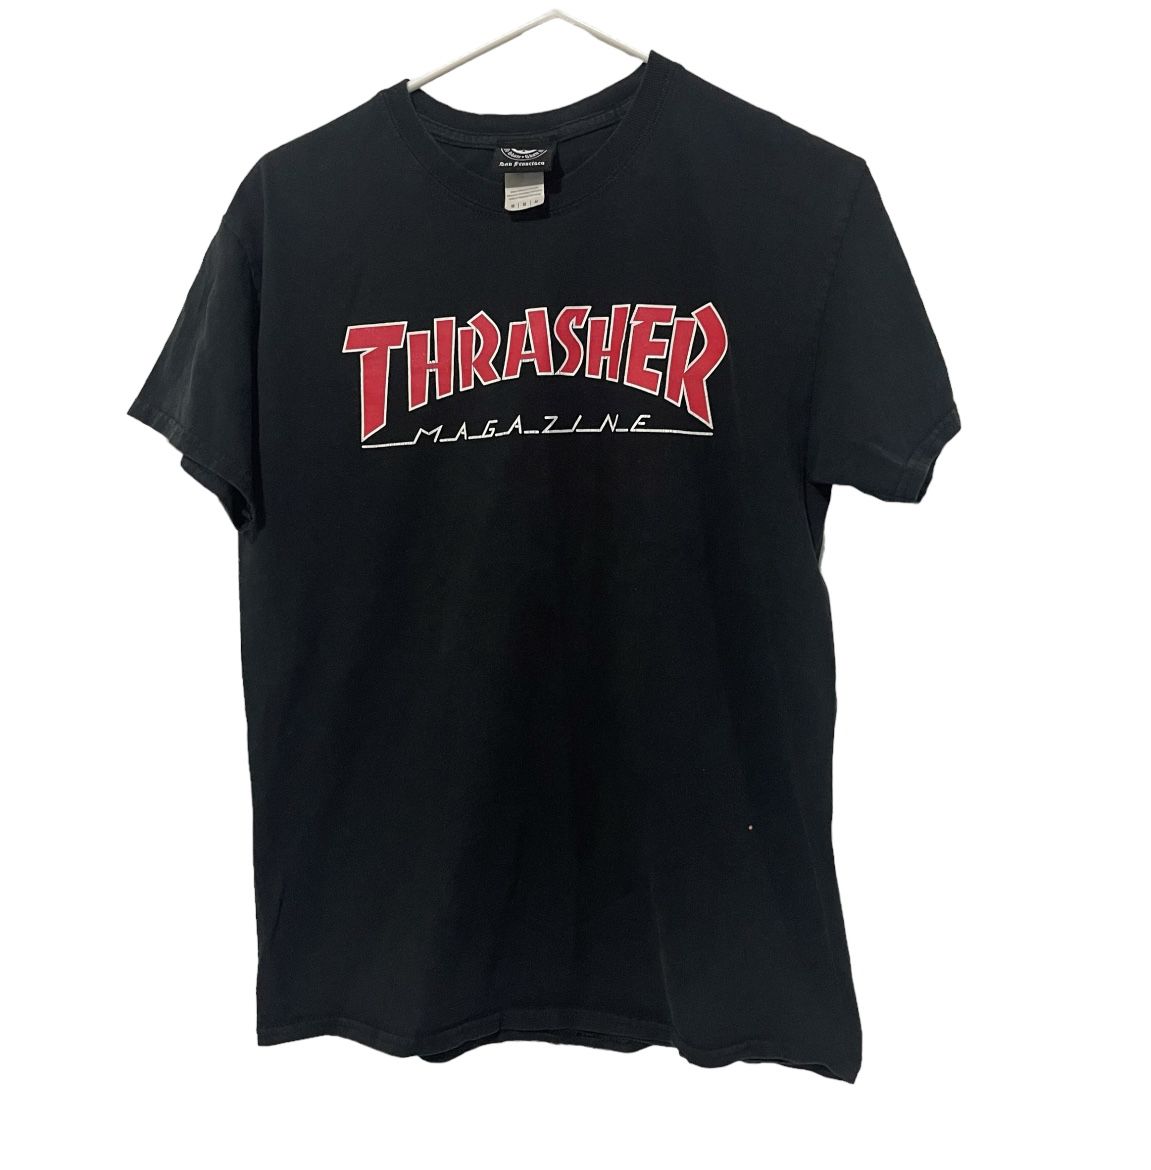 Thrasher Magazine T-Shirt Adult Size Medium Black Short Sleeve Tee San Francisco